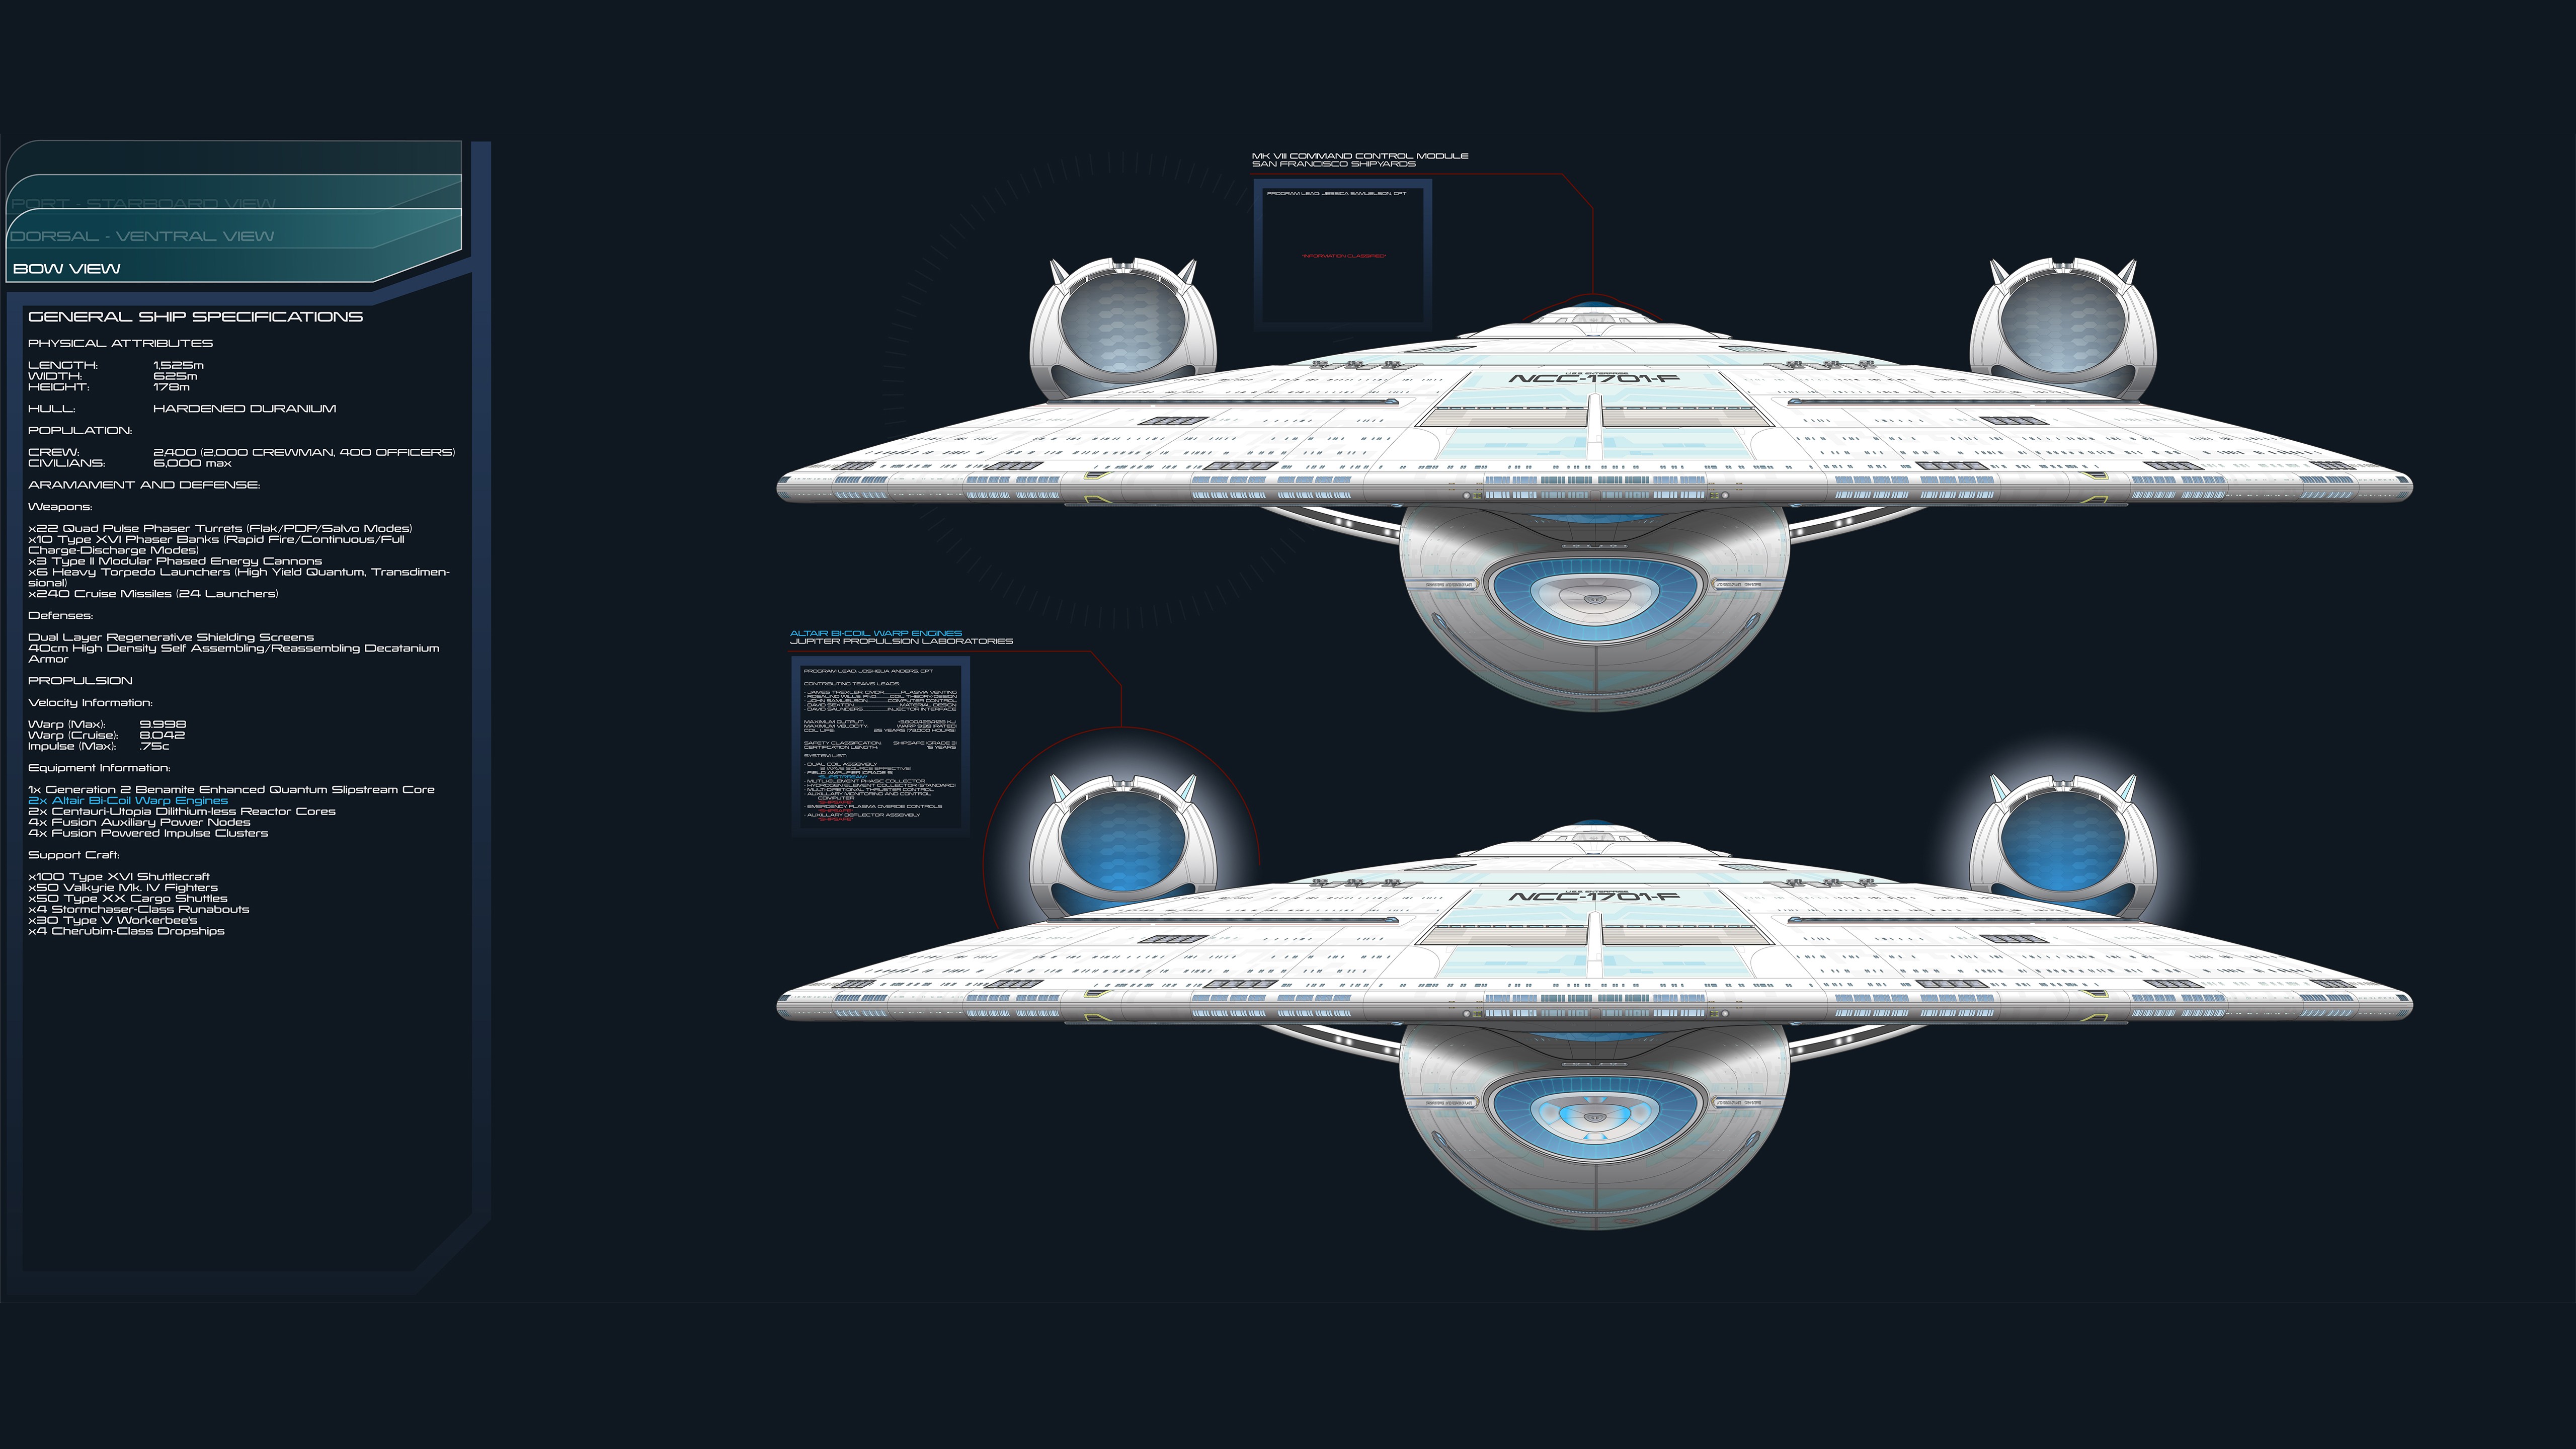 Star Trek 2009 Uss Enterprise Ncc 1701 - HD Wallpaper 